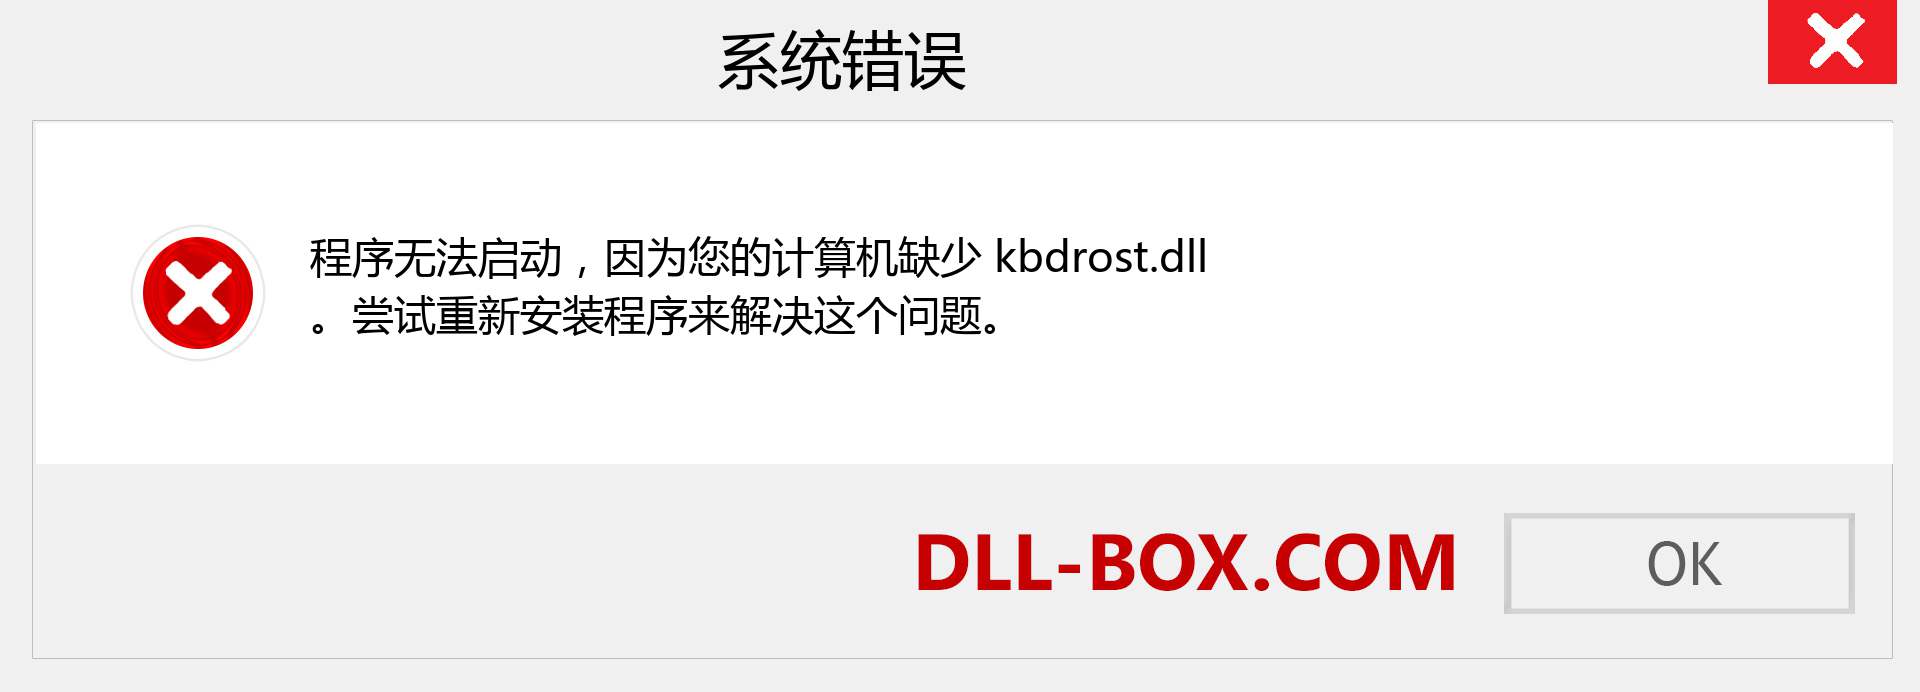 kbdrost.dll 文件丢失？。 适用于 Windows 7、8、10 的下载 - 修复 Windows、照片、图像上的 kbdrost dll 丢失错误